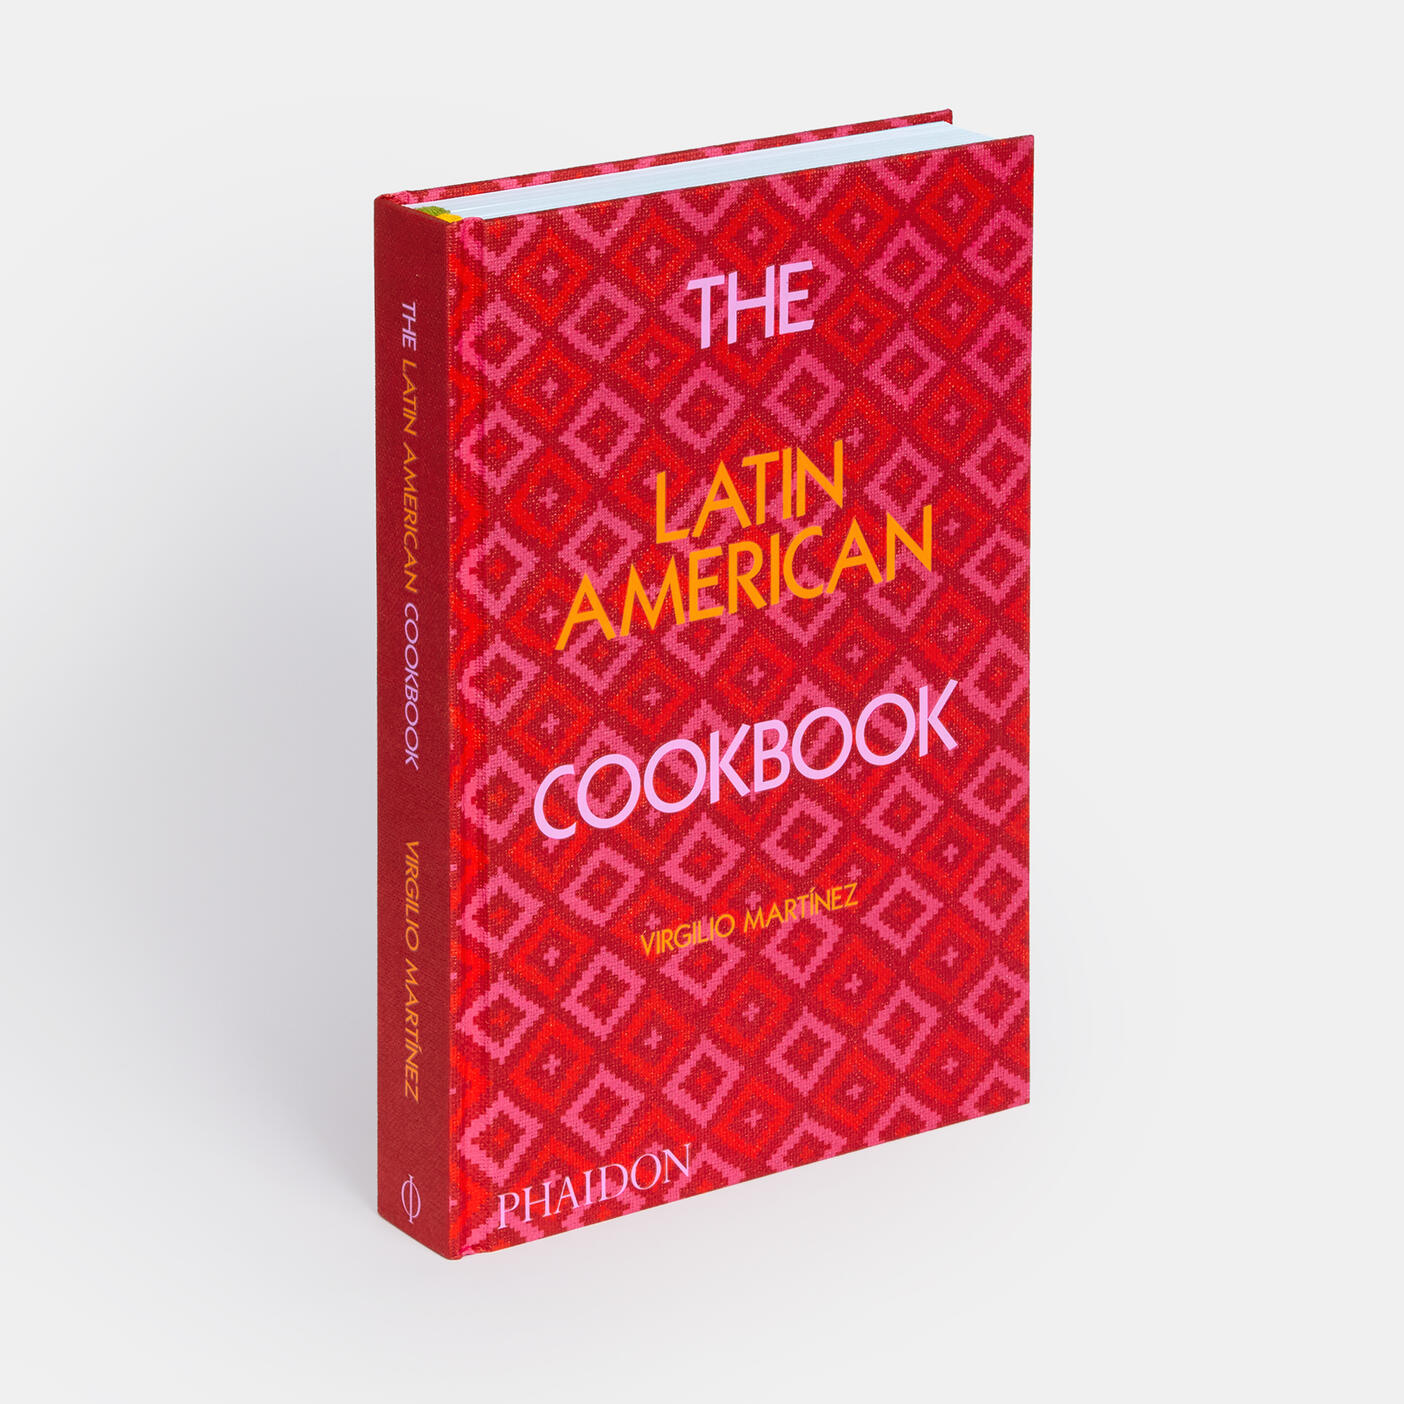 Latin American Cookbook